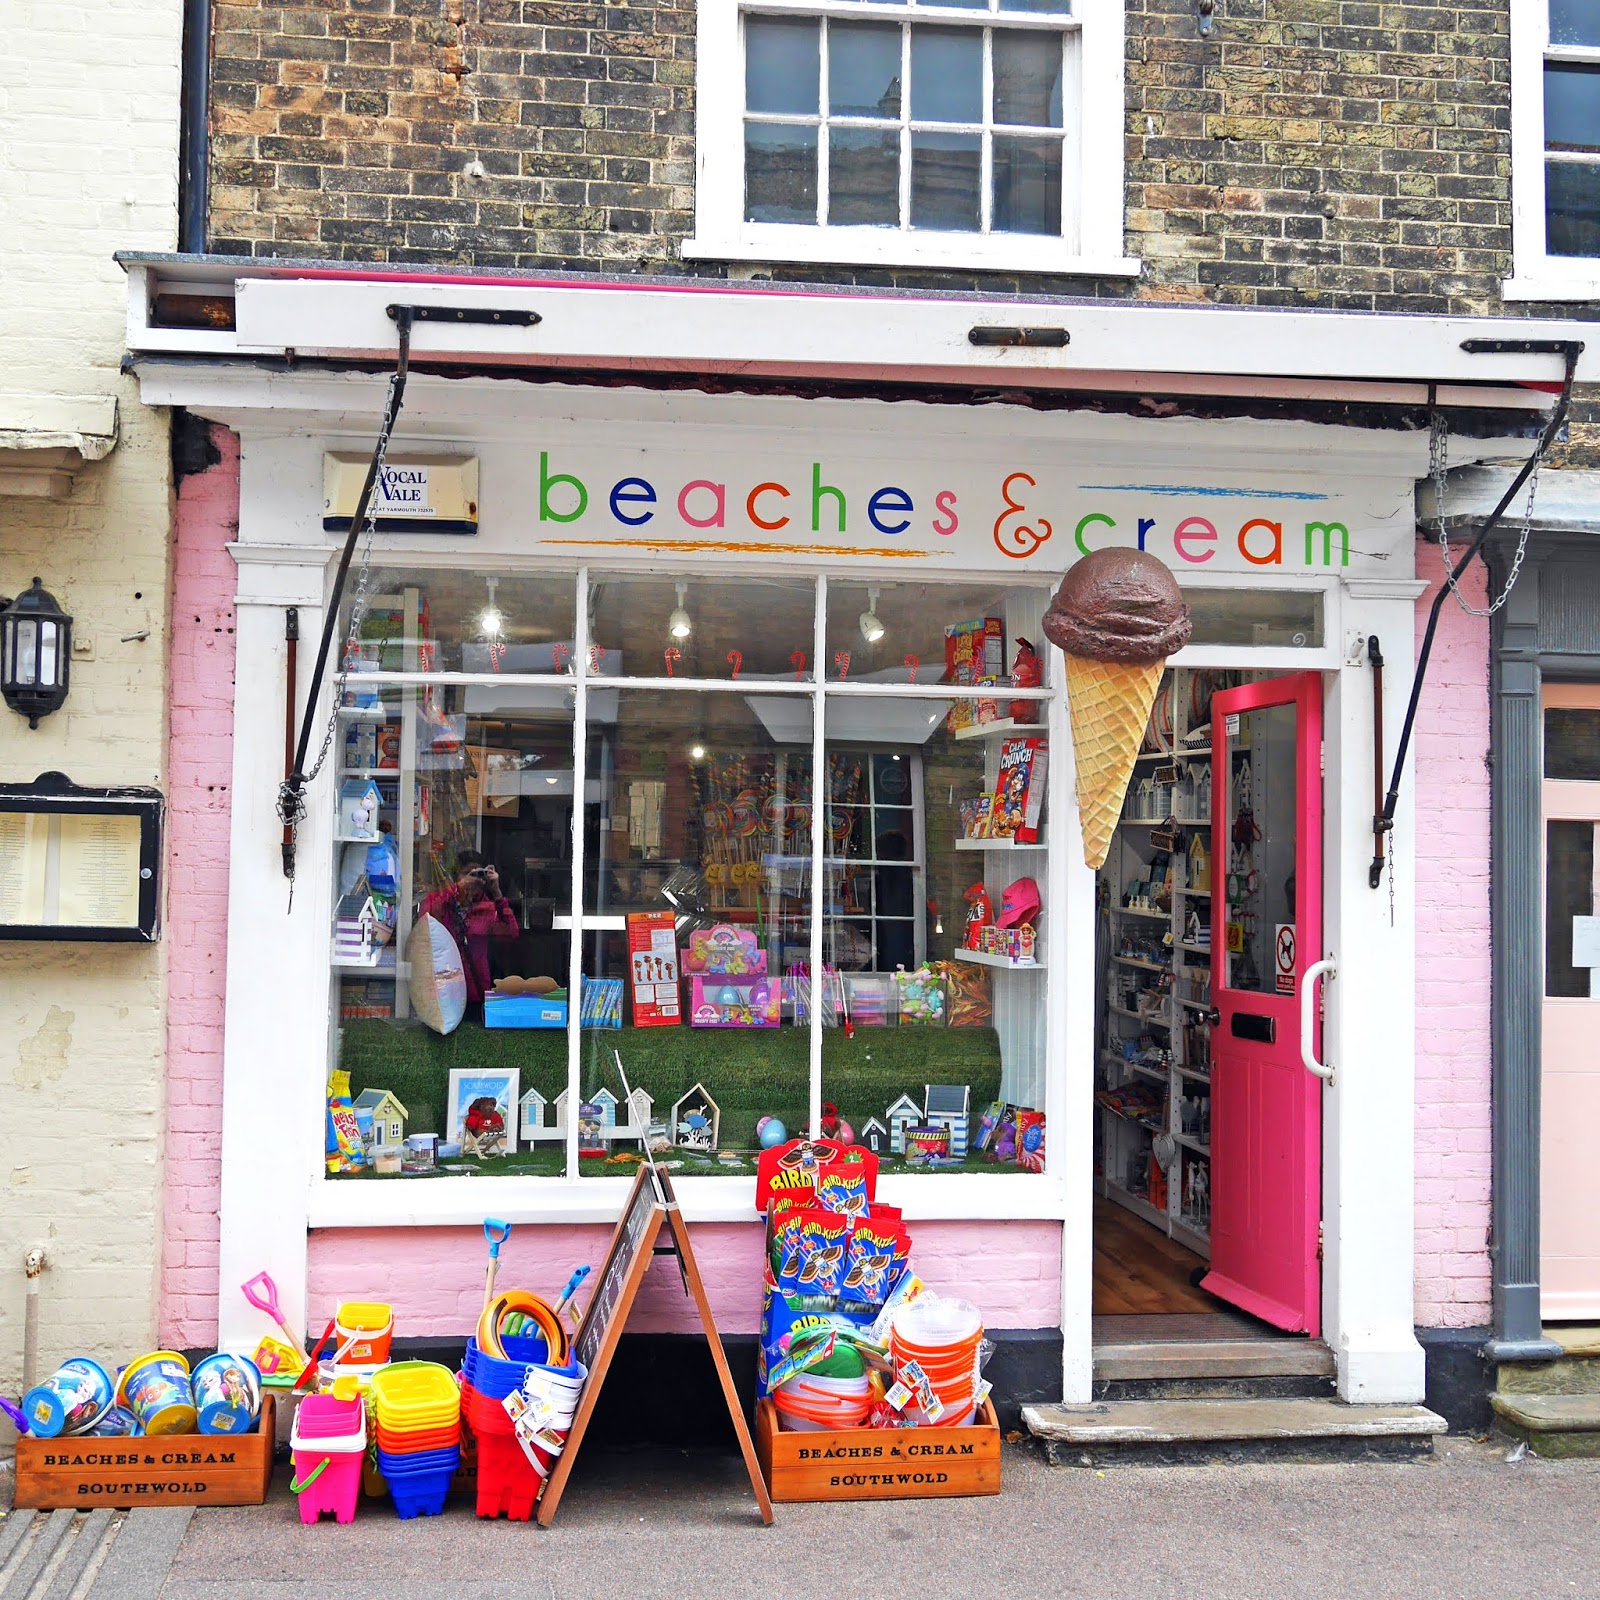 Beaches & Cream shop in Southwold town centre